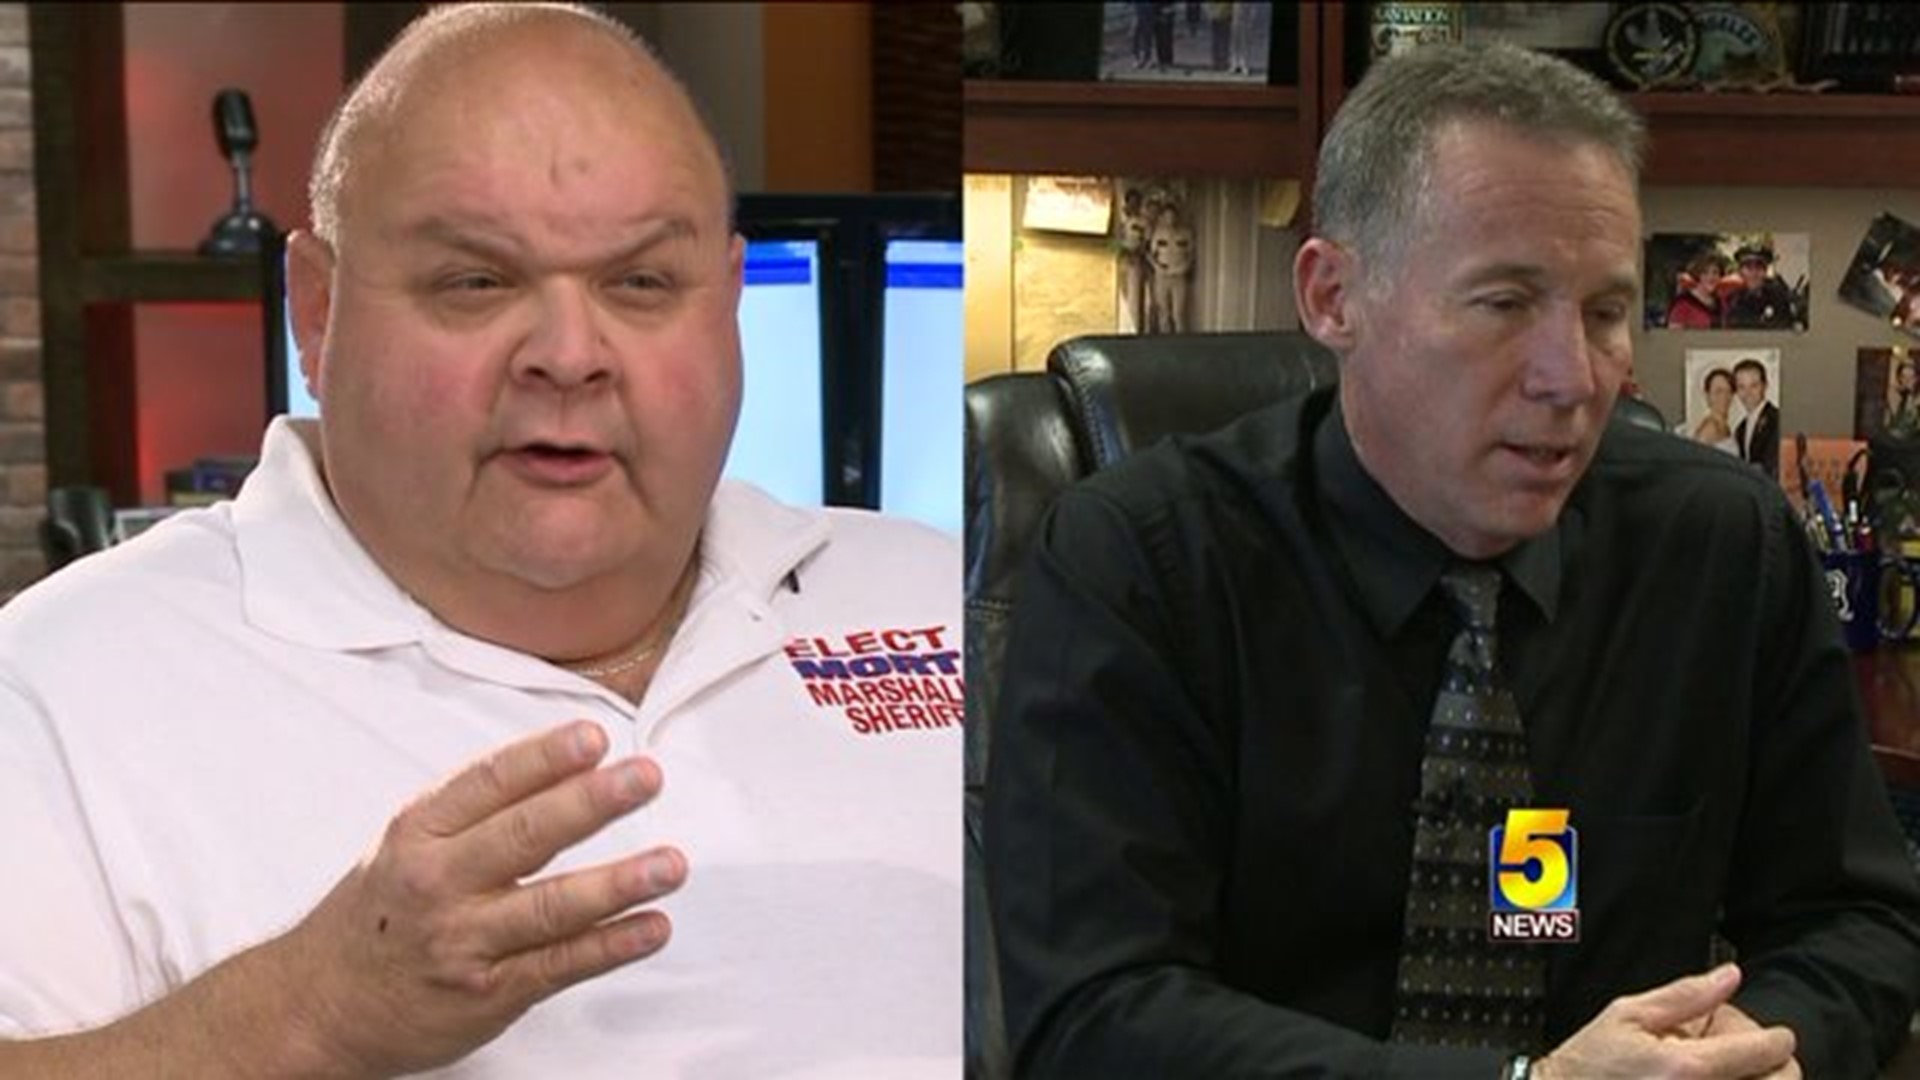 Two Candidates For Washington County Sheriff